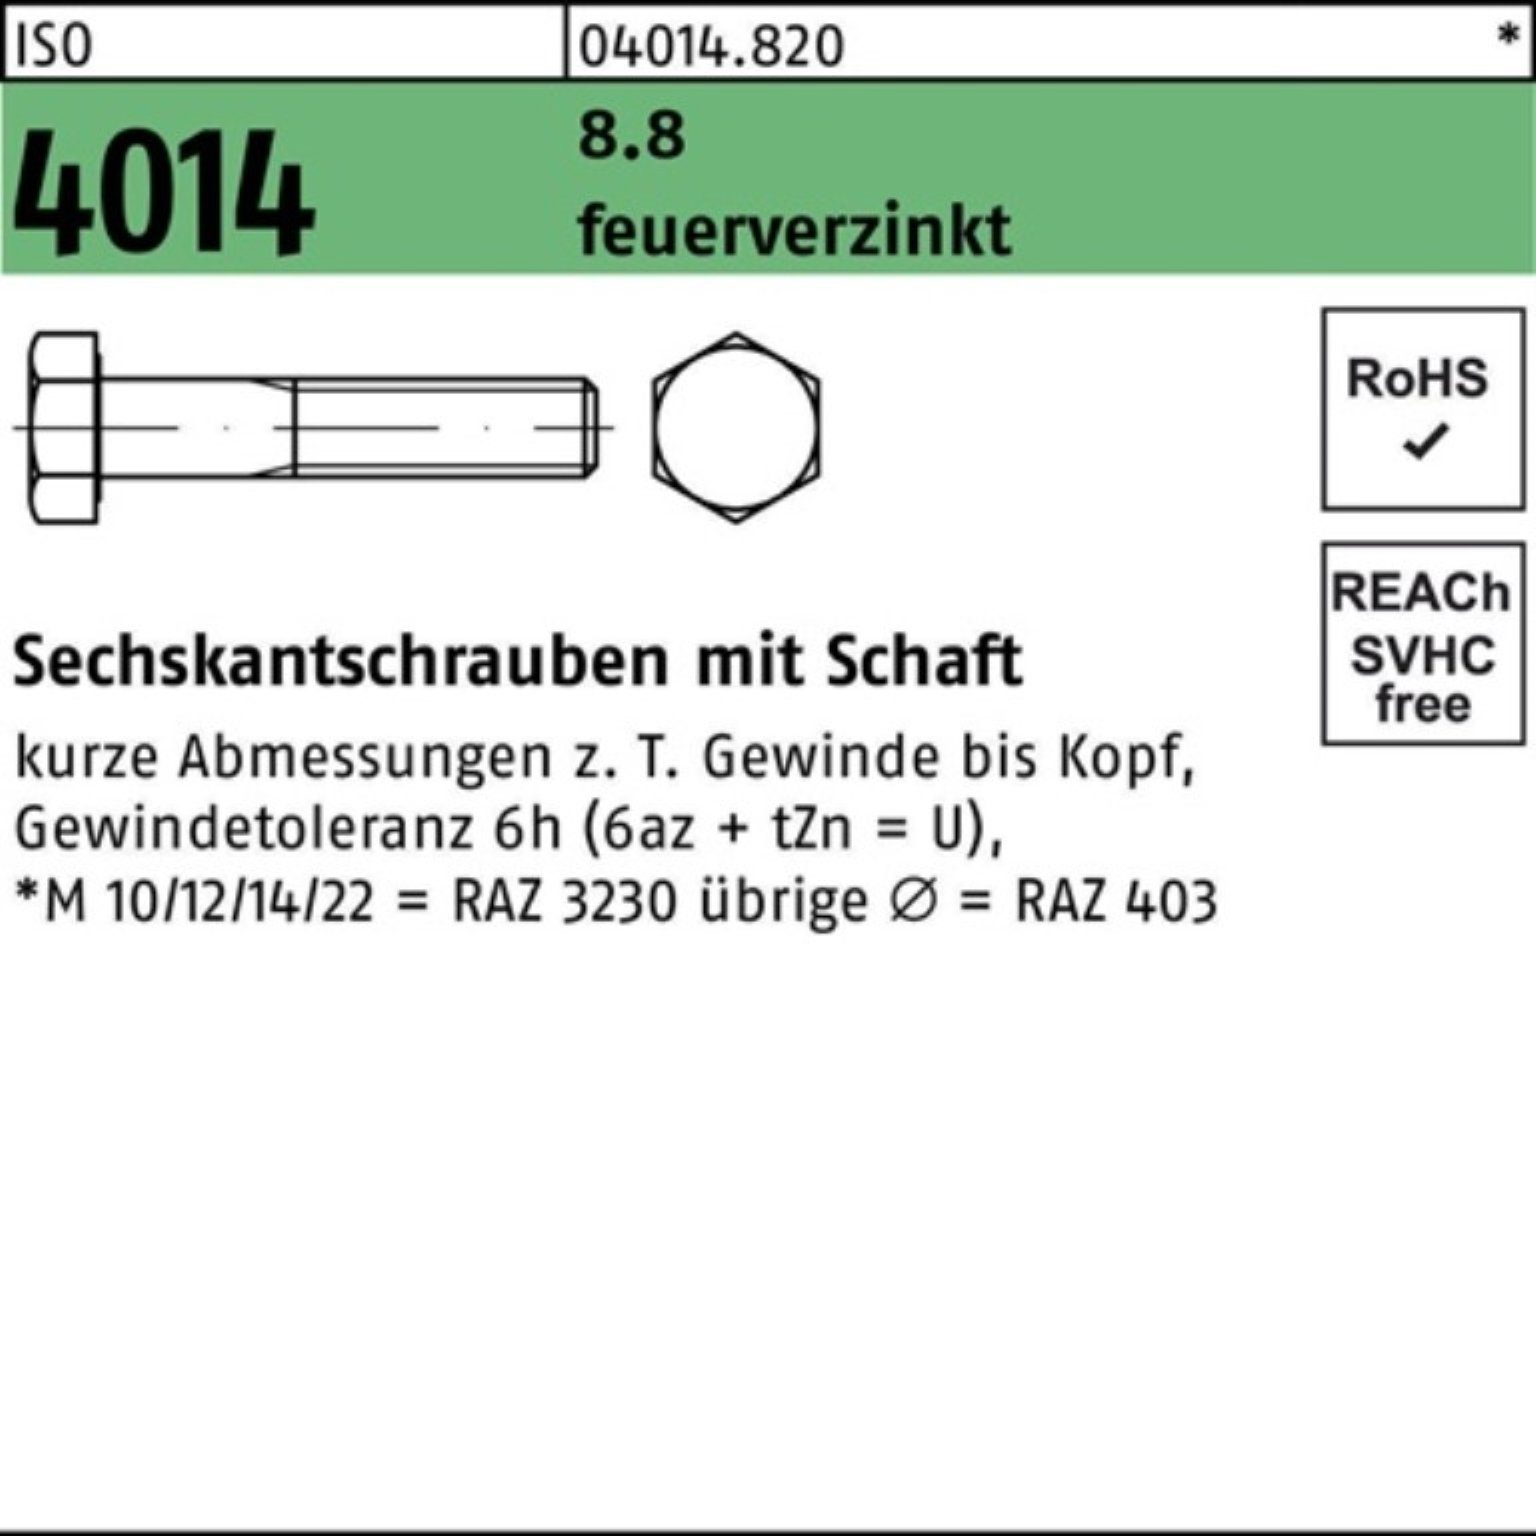 Bufab Sechskantschraube 100er Pack Sechskantschraube ISO 4014 Schaft M16x 70 8.8 feuerverz. 25 | Schrauben